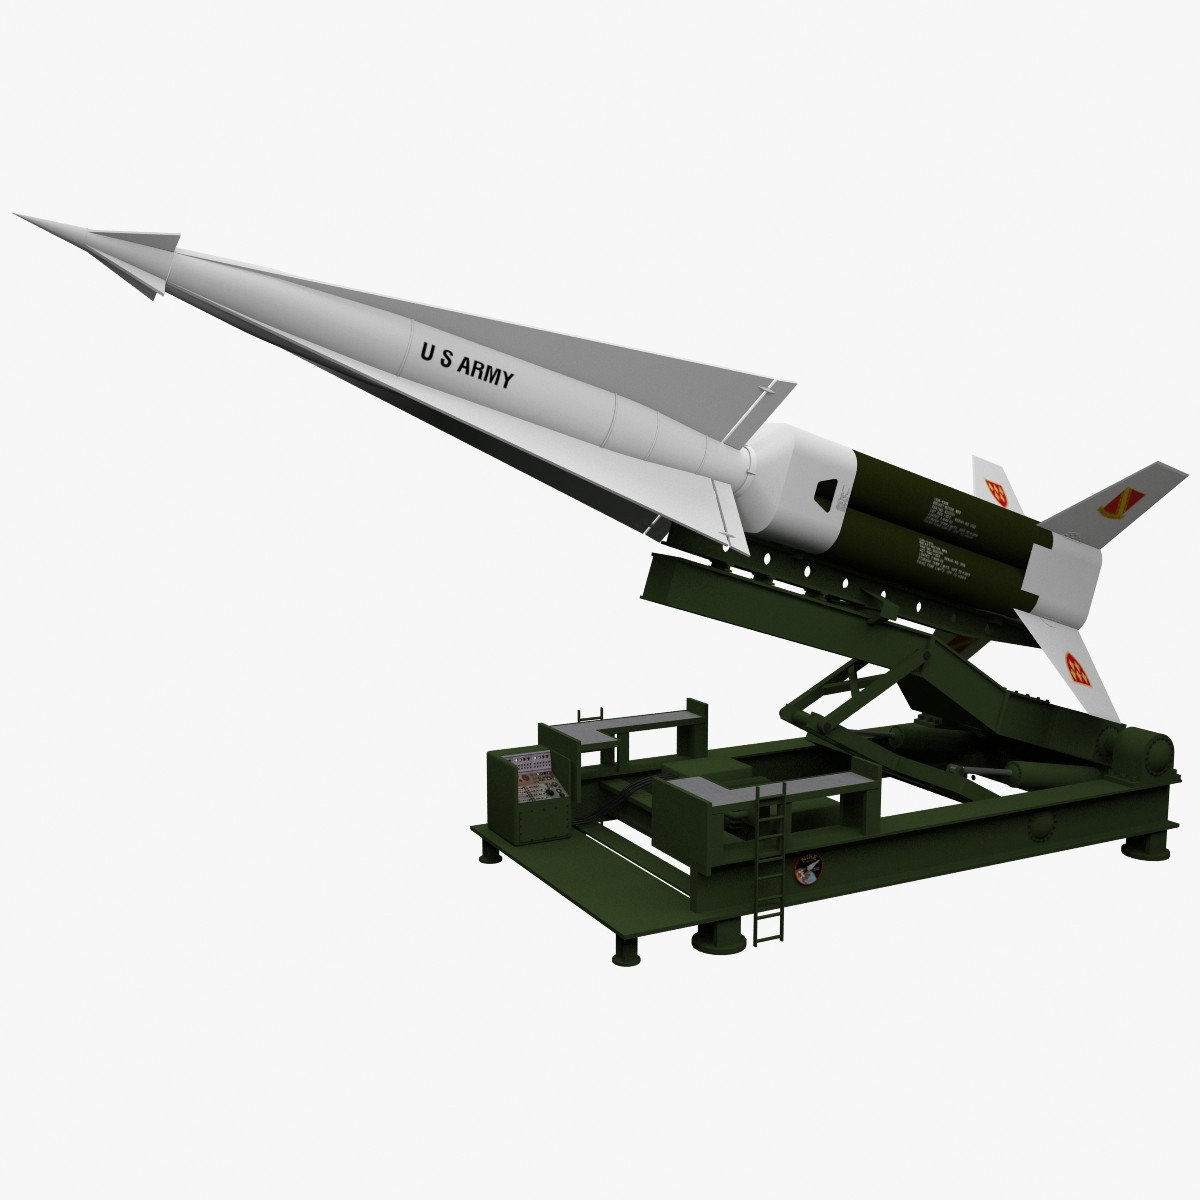 schuif Doe voorzichtig baan stlfinder on Twitter: "Nike Hercules Missile With Launcher  https://t.co/NMLCc5xl7G #3Dprinting #3dprint #AdditiveManufacturing  https://t.co/XwE0dPZsxB" / Twitter